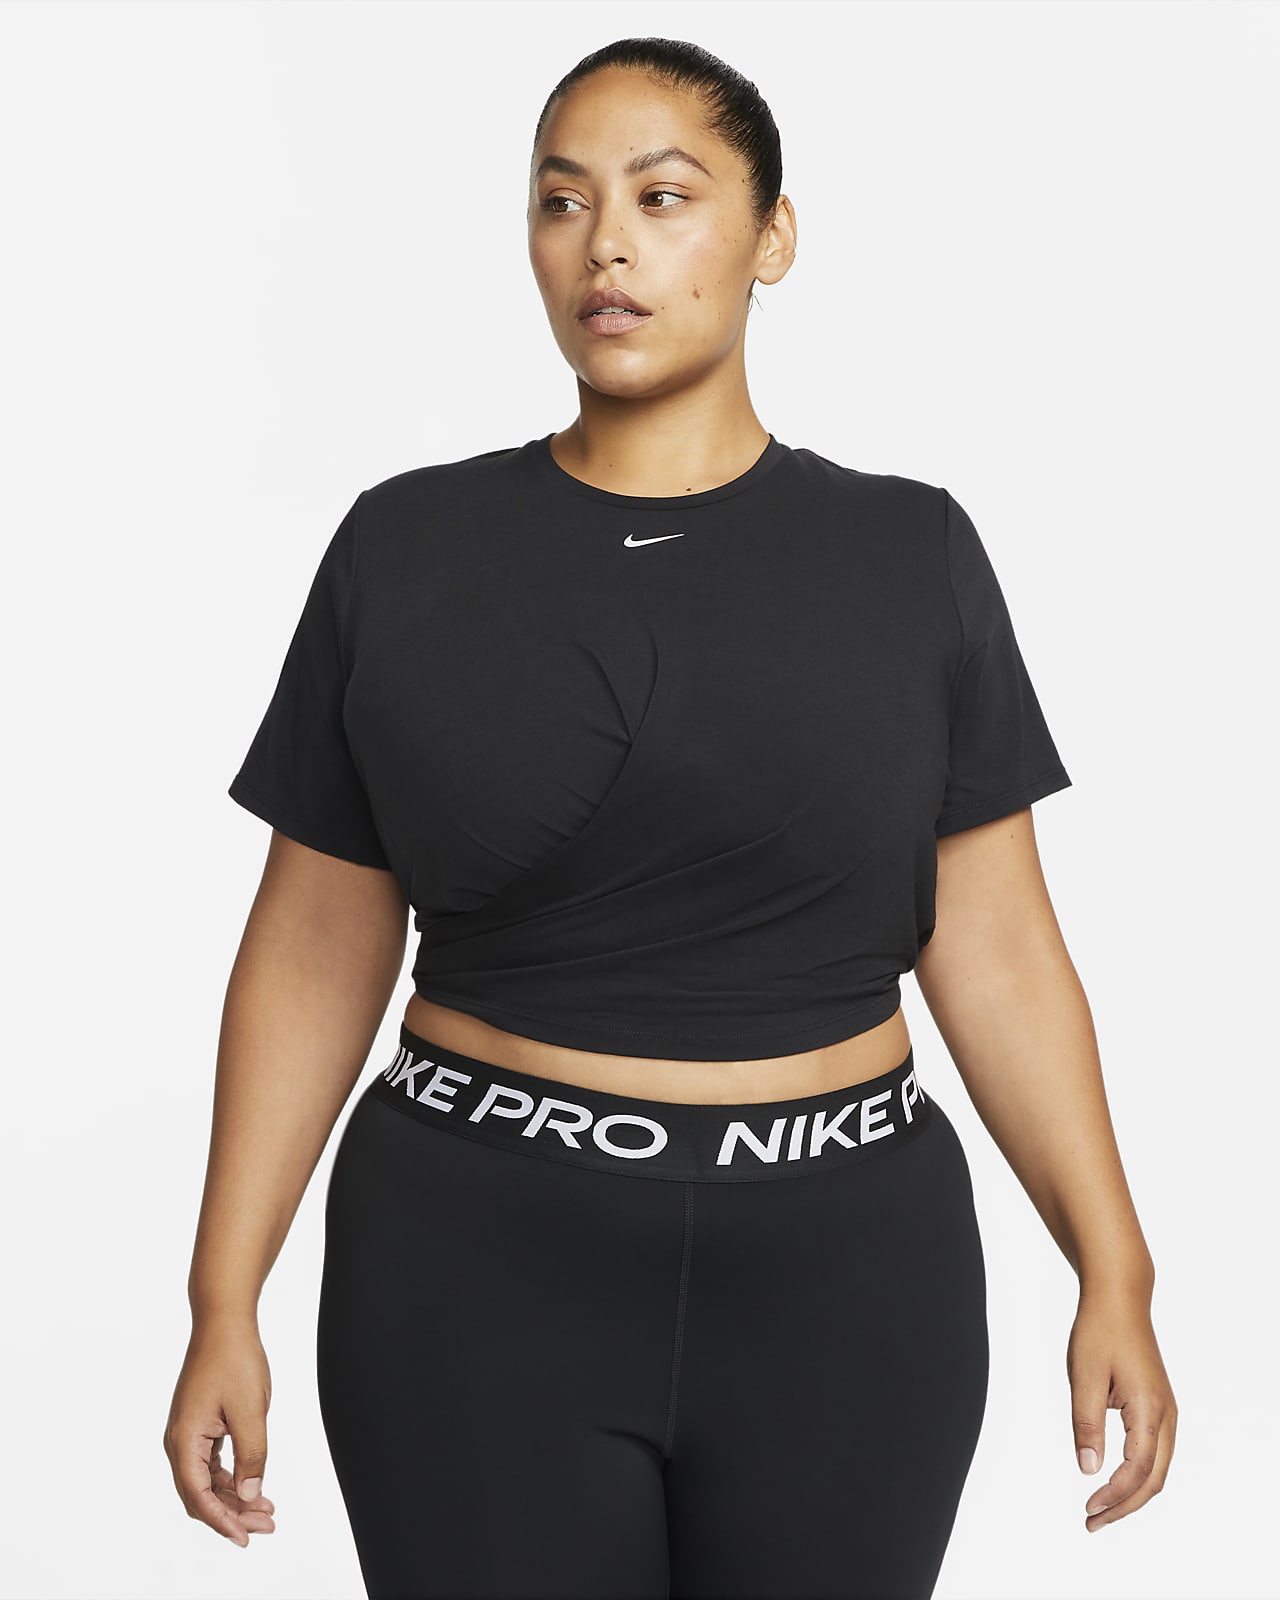 Nike Dri-FIT One Luxe Women's Twist Cropped Short-Sleeve Top (Plus Size)